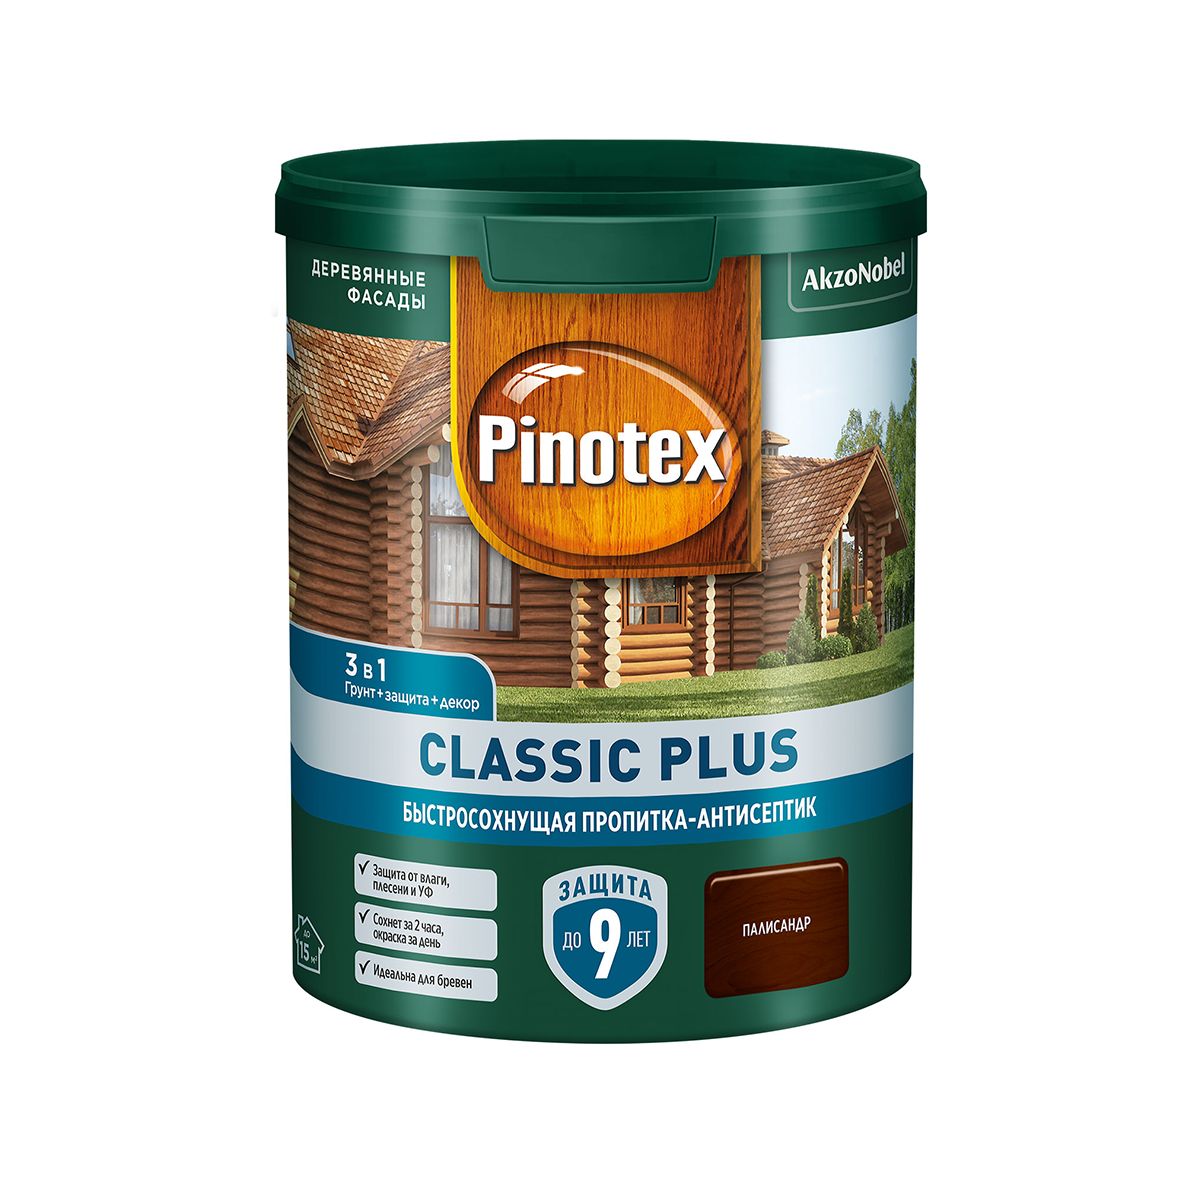 Пропитка-антисептик Pinotex Classic Plus 3 в 1,быстросохнущая, палисандр, 900 мл пропитка антисептик renner